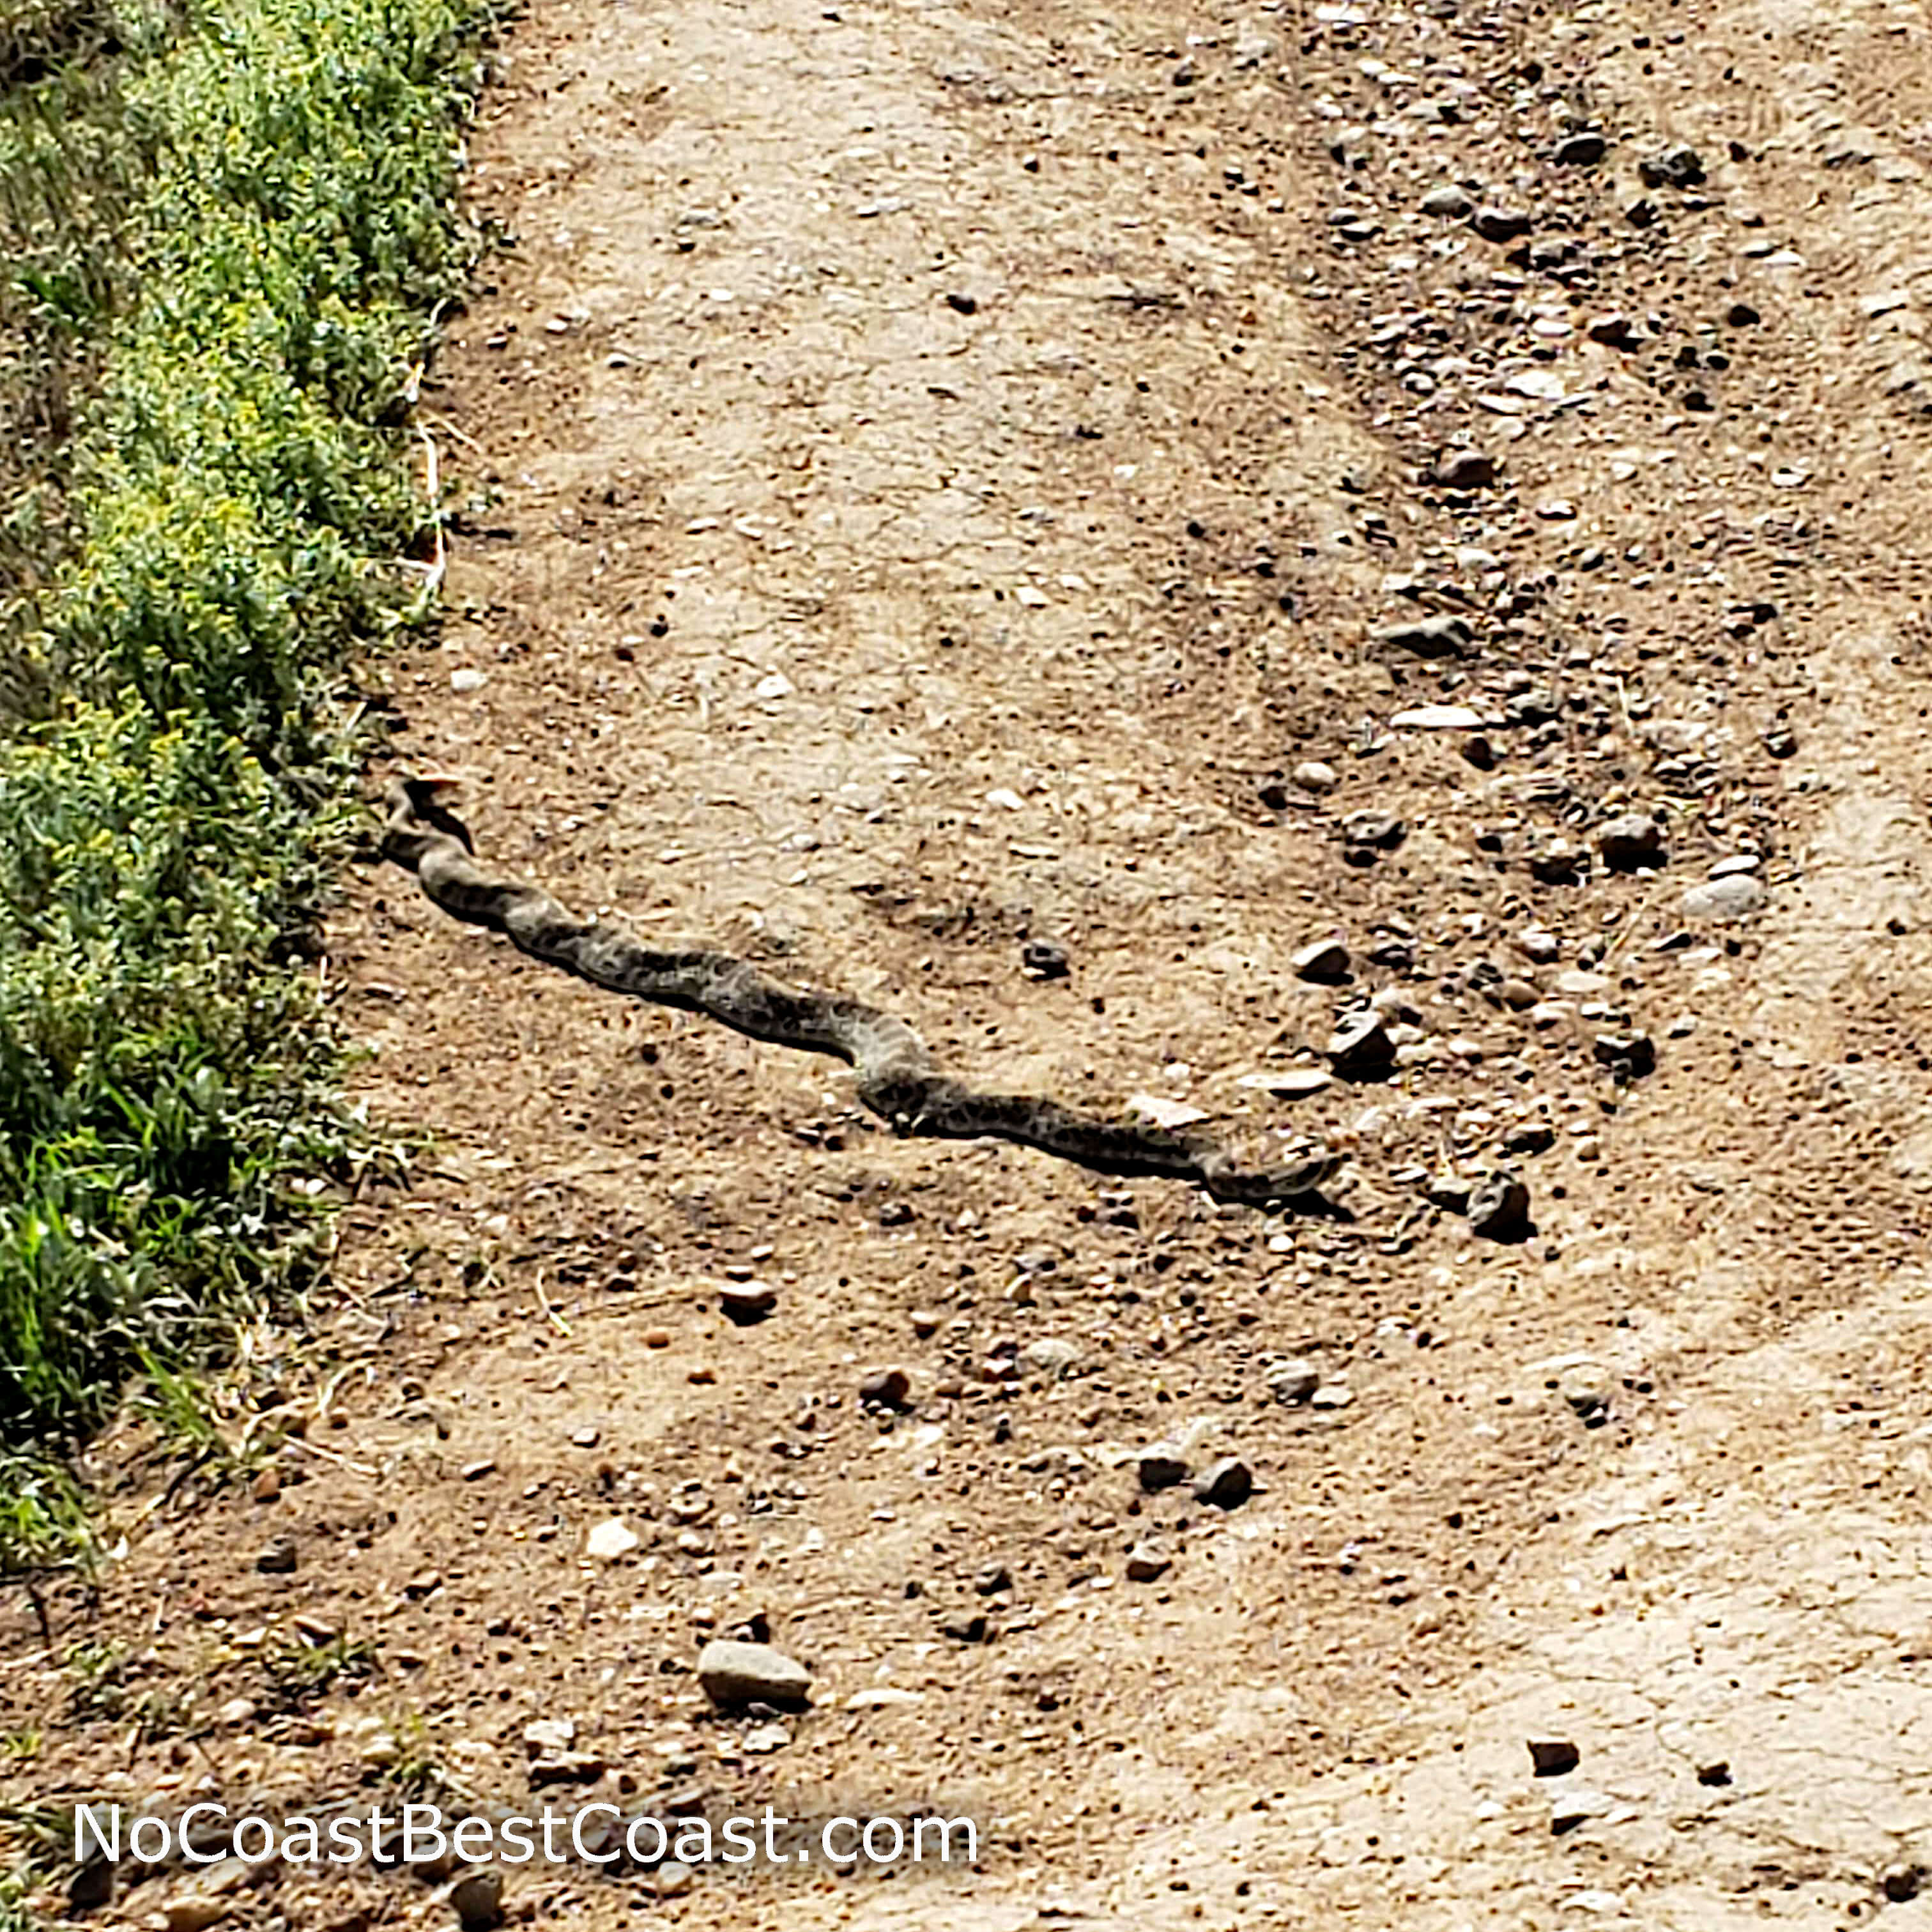 A rattlesnake sunning itself on the trail